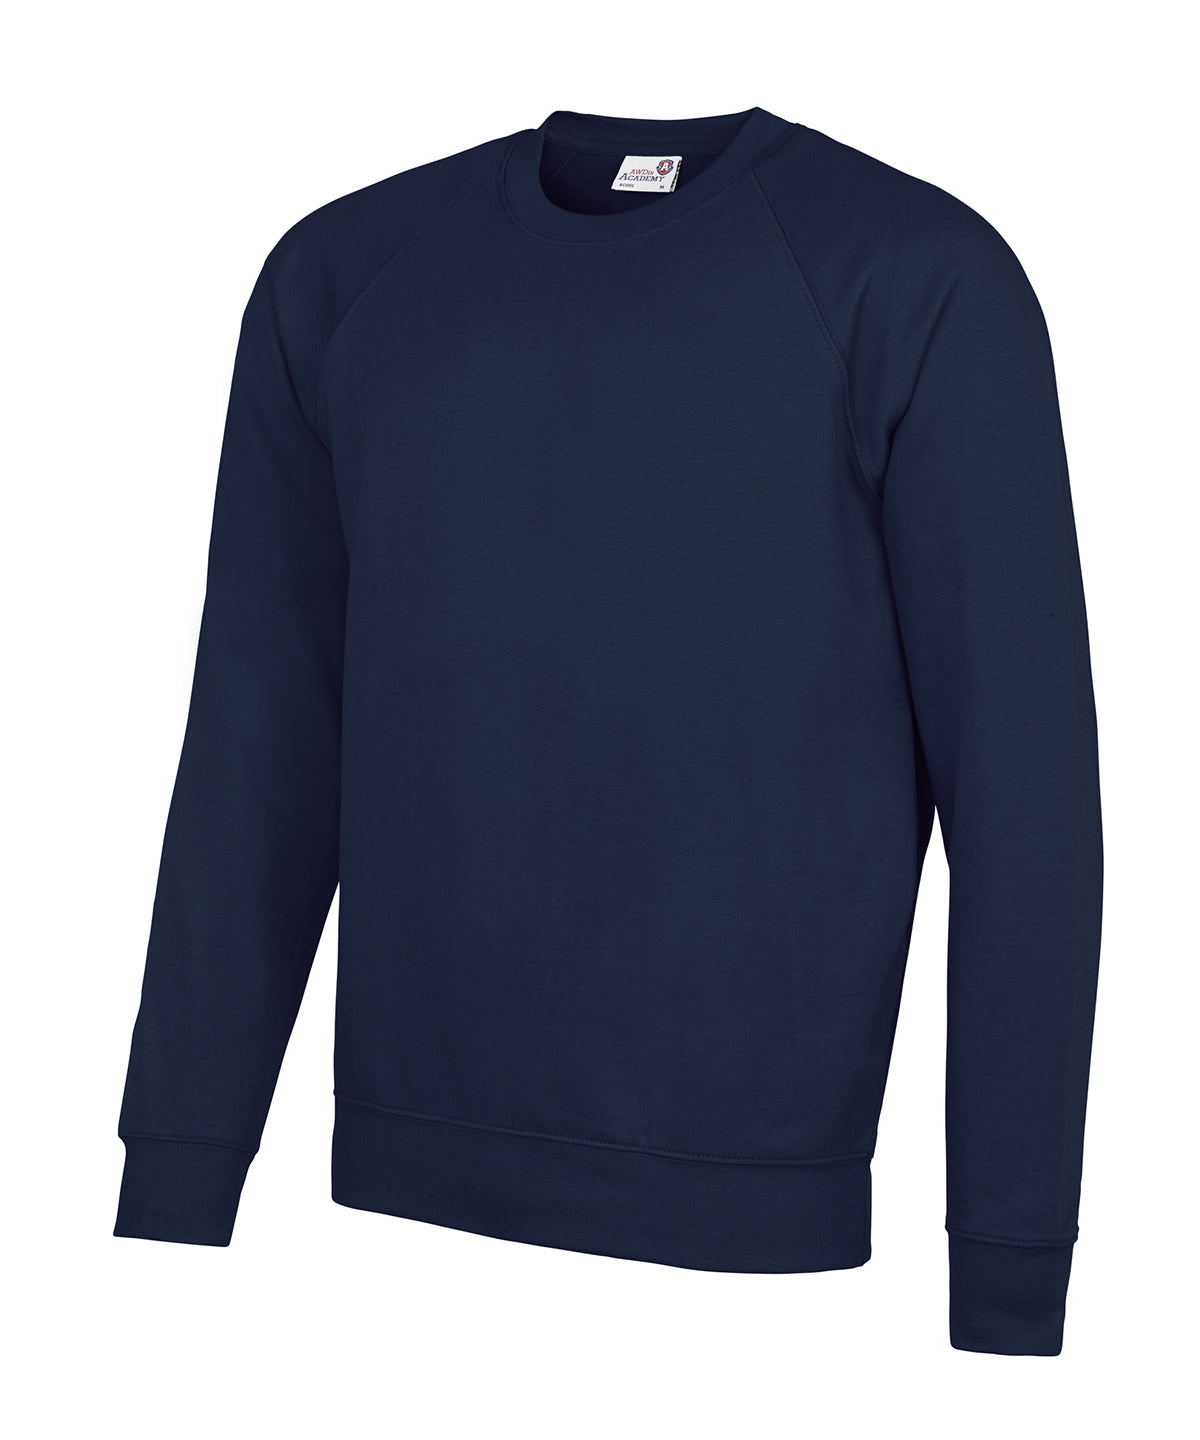 Personalised Sweatshirts - Burgundy AWDis Academy Senior Academy raglan sweatshirt